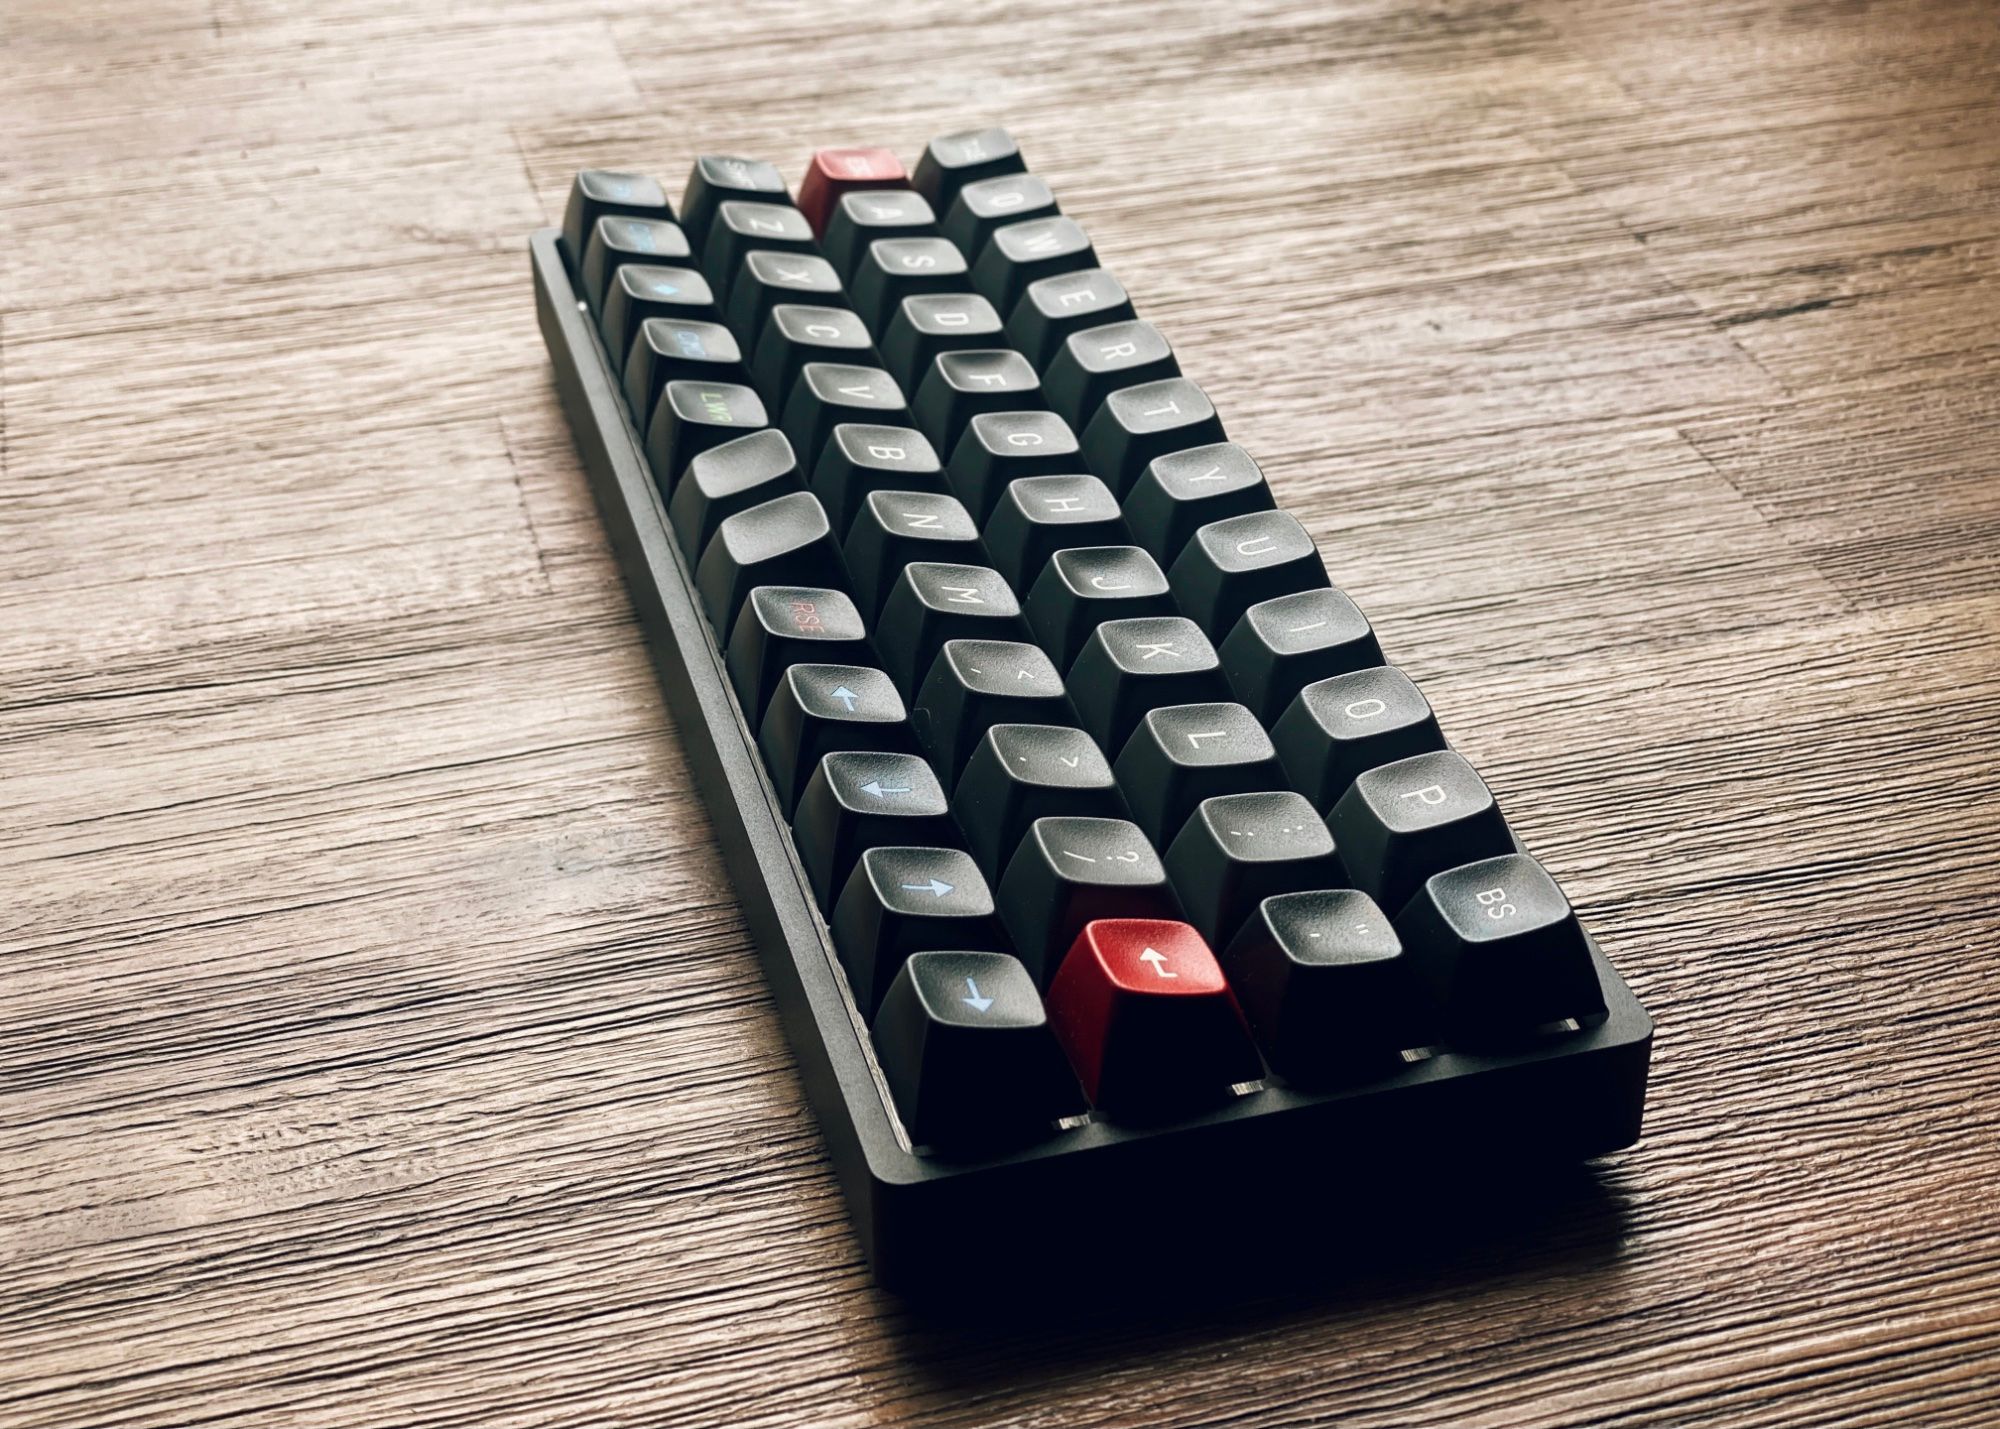 Planck Keyboard with Susuwatari keycaps